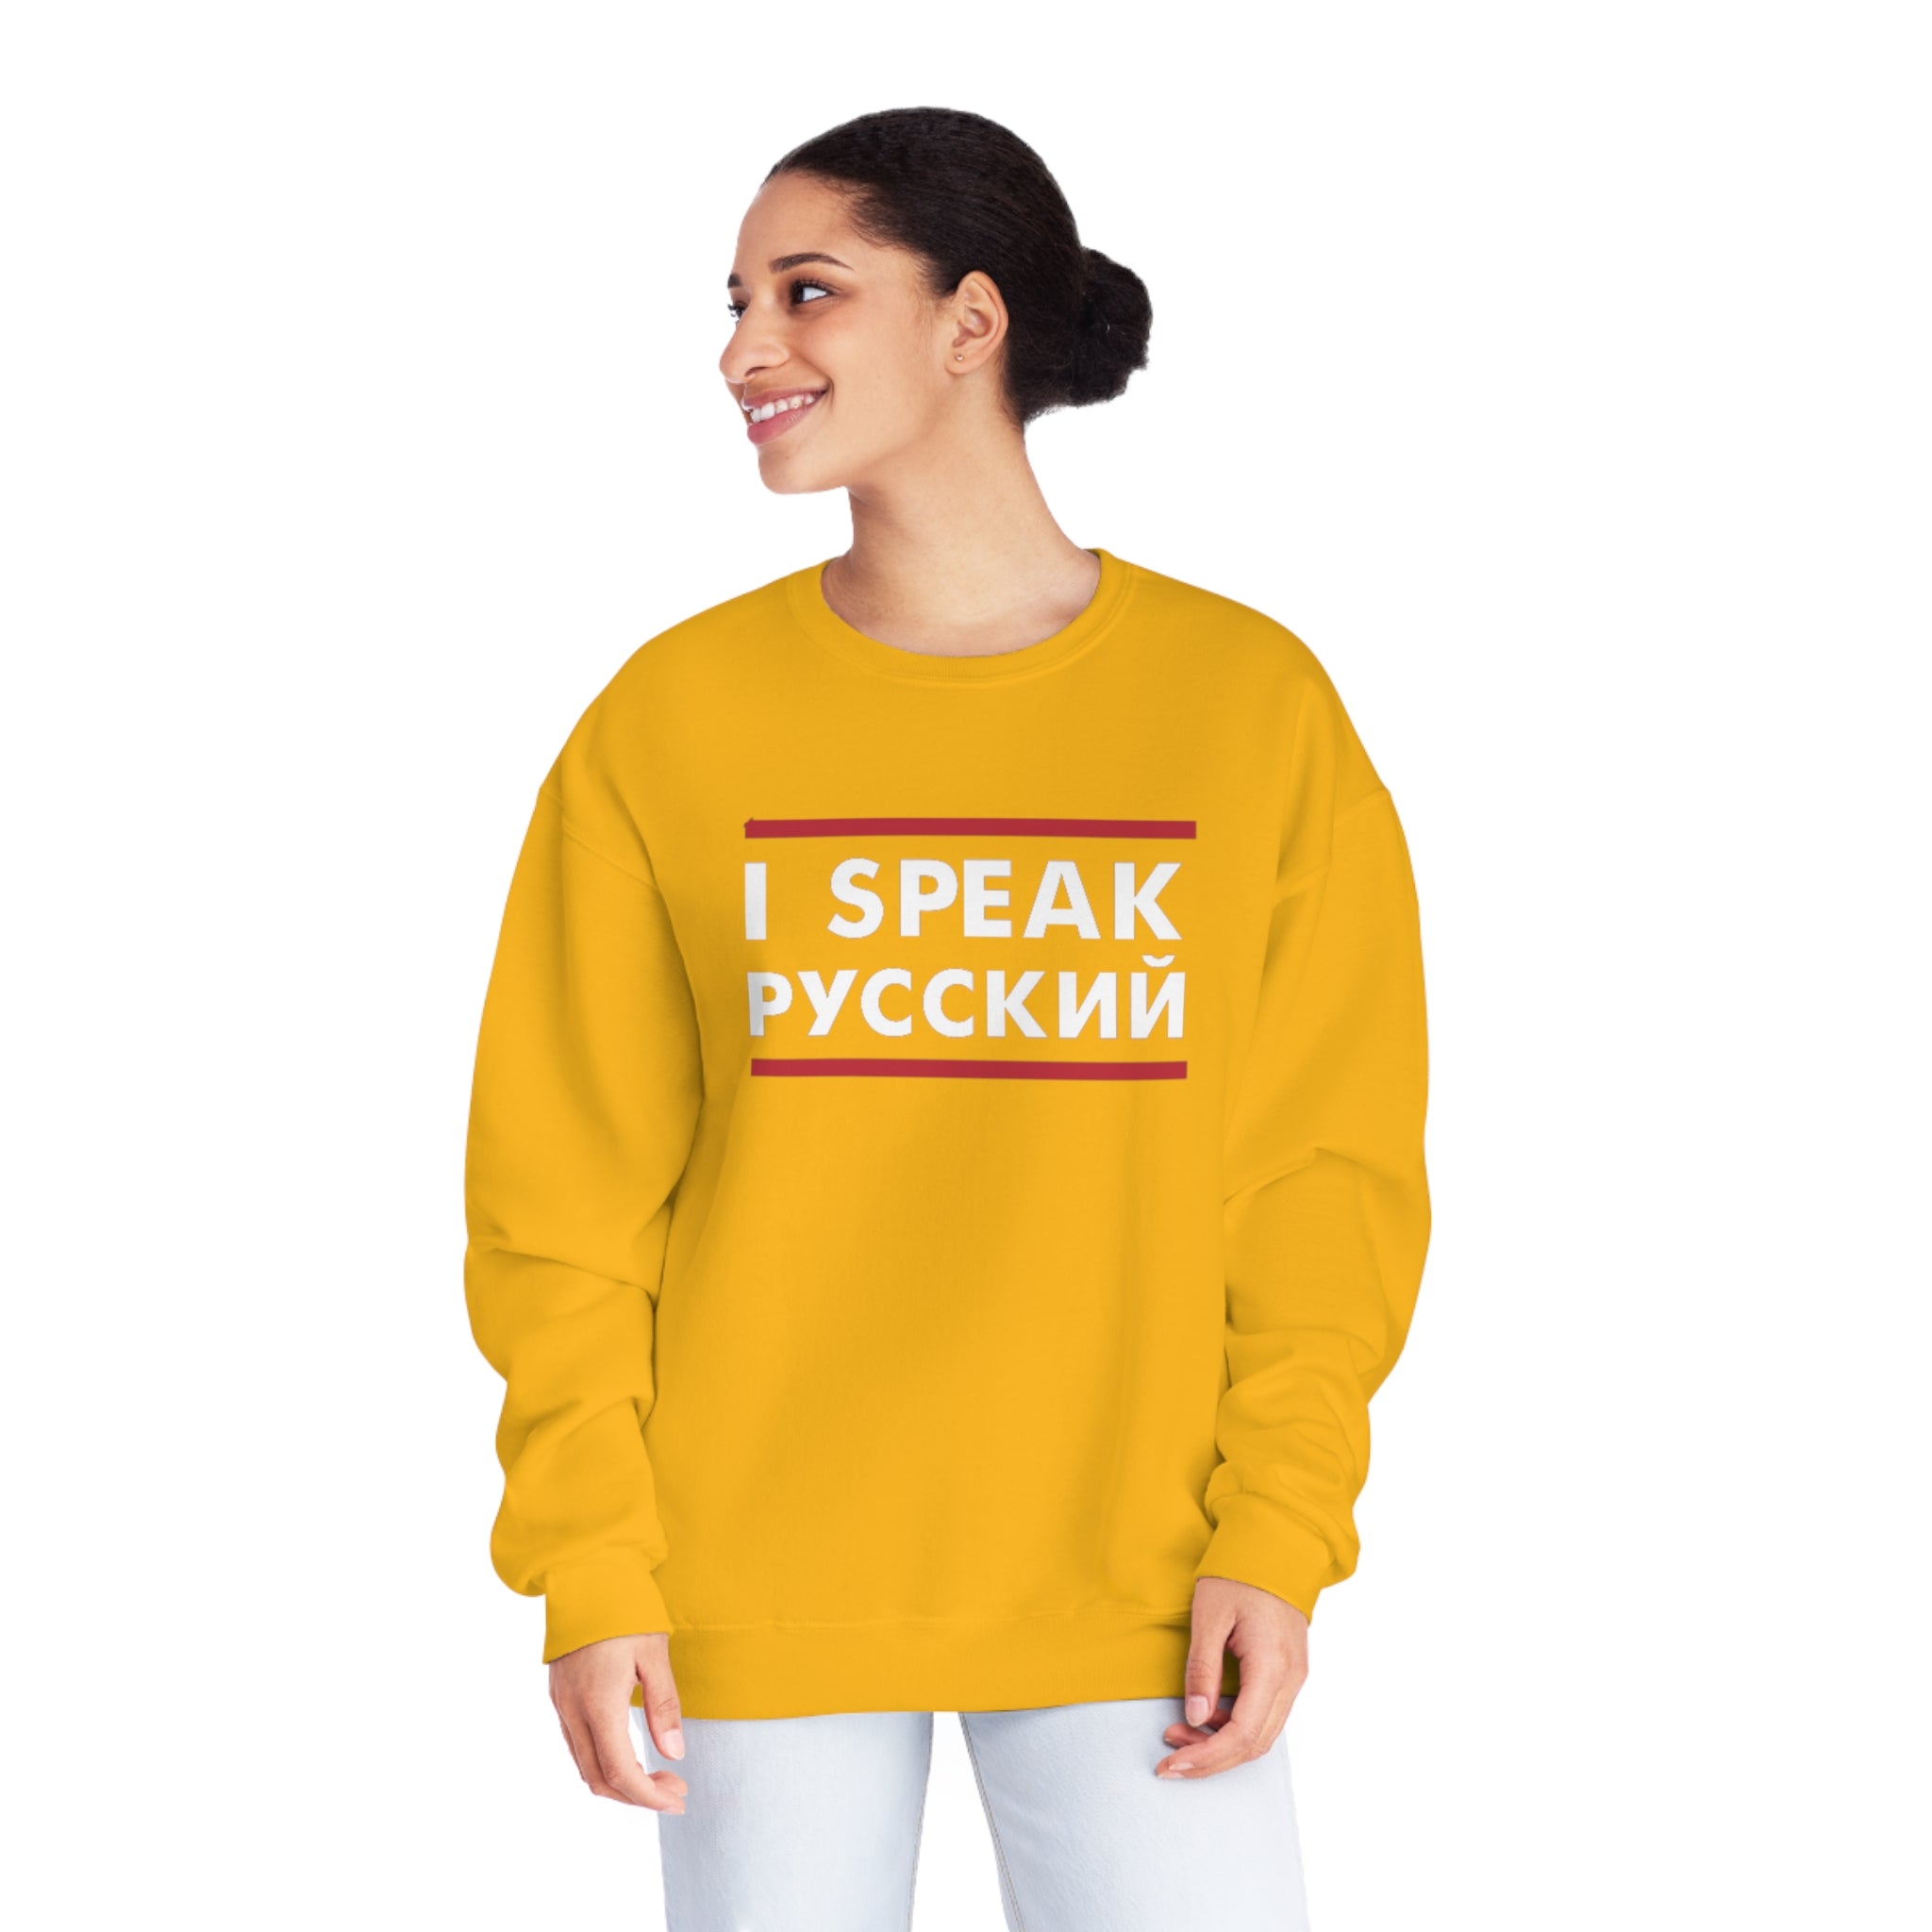 I SPEAK Russian Crewneck Sweatshirt